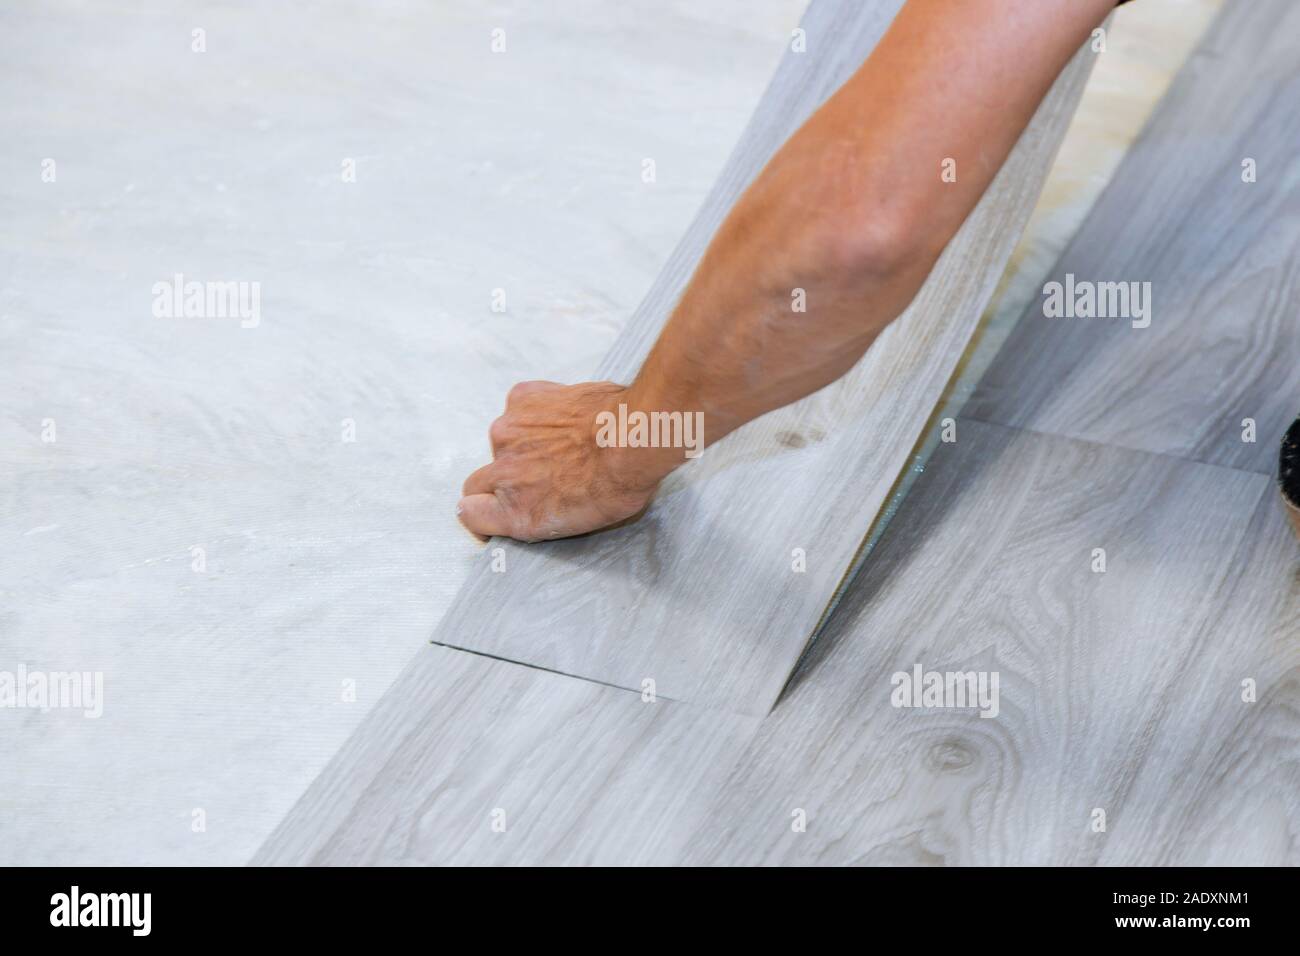 Worker installing new vinyl tile floor with new home improvement laminate wood texture floor Stock Photo